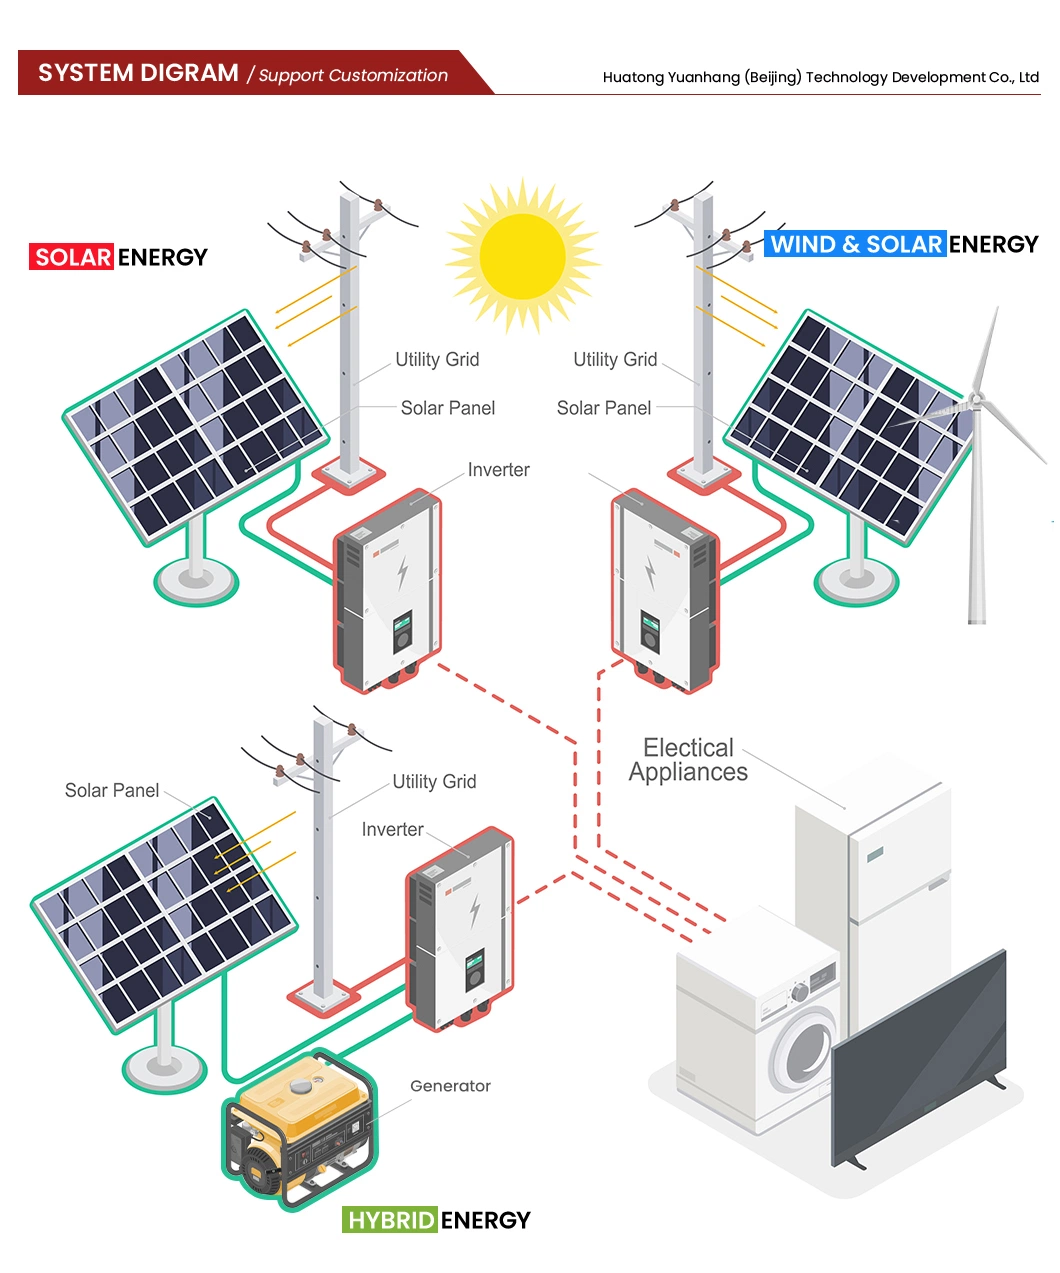 Htonetech China Triangular Solar Panel Suppliers 5kw 3kw 3 Phase Solar Power System with 5kv Wind Turbine